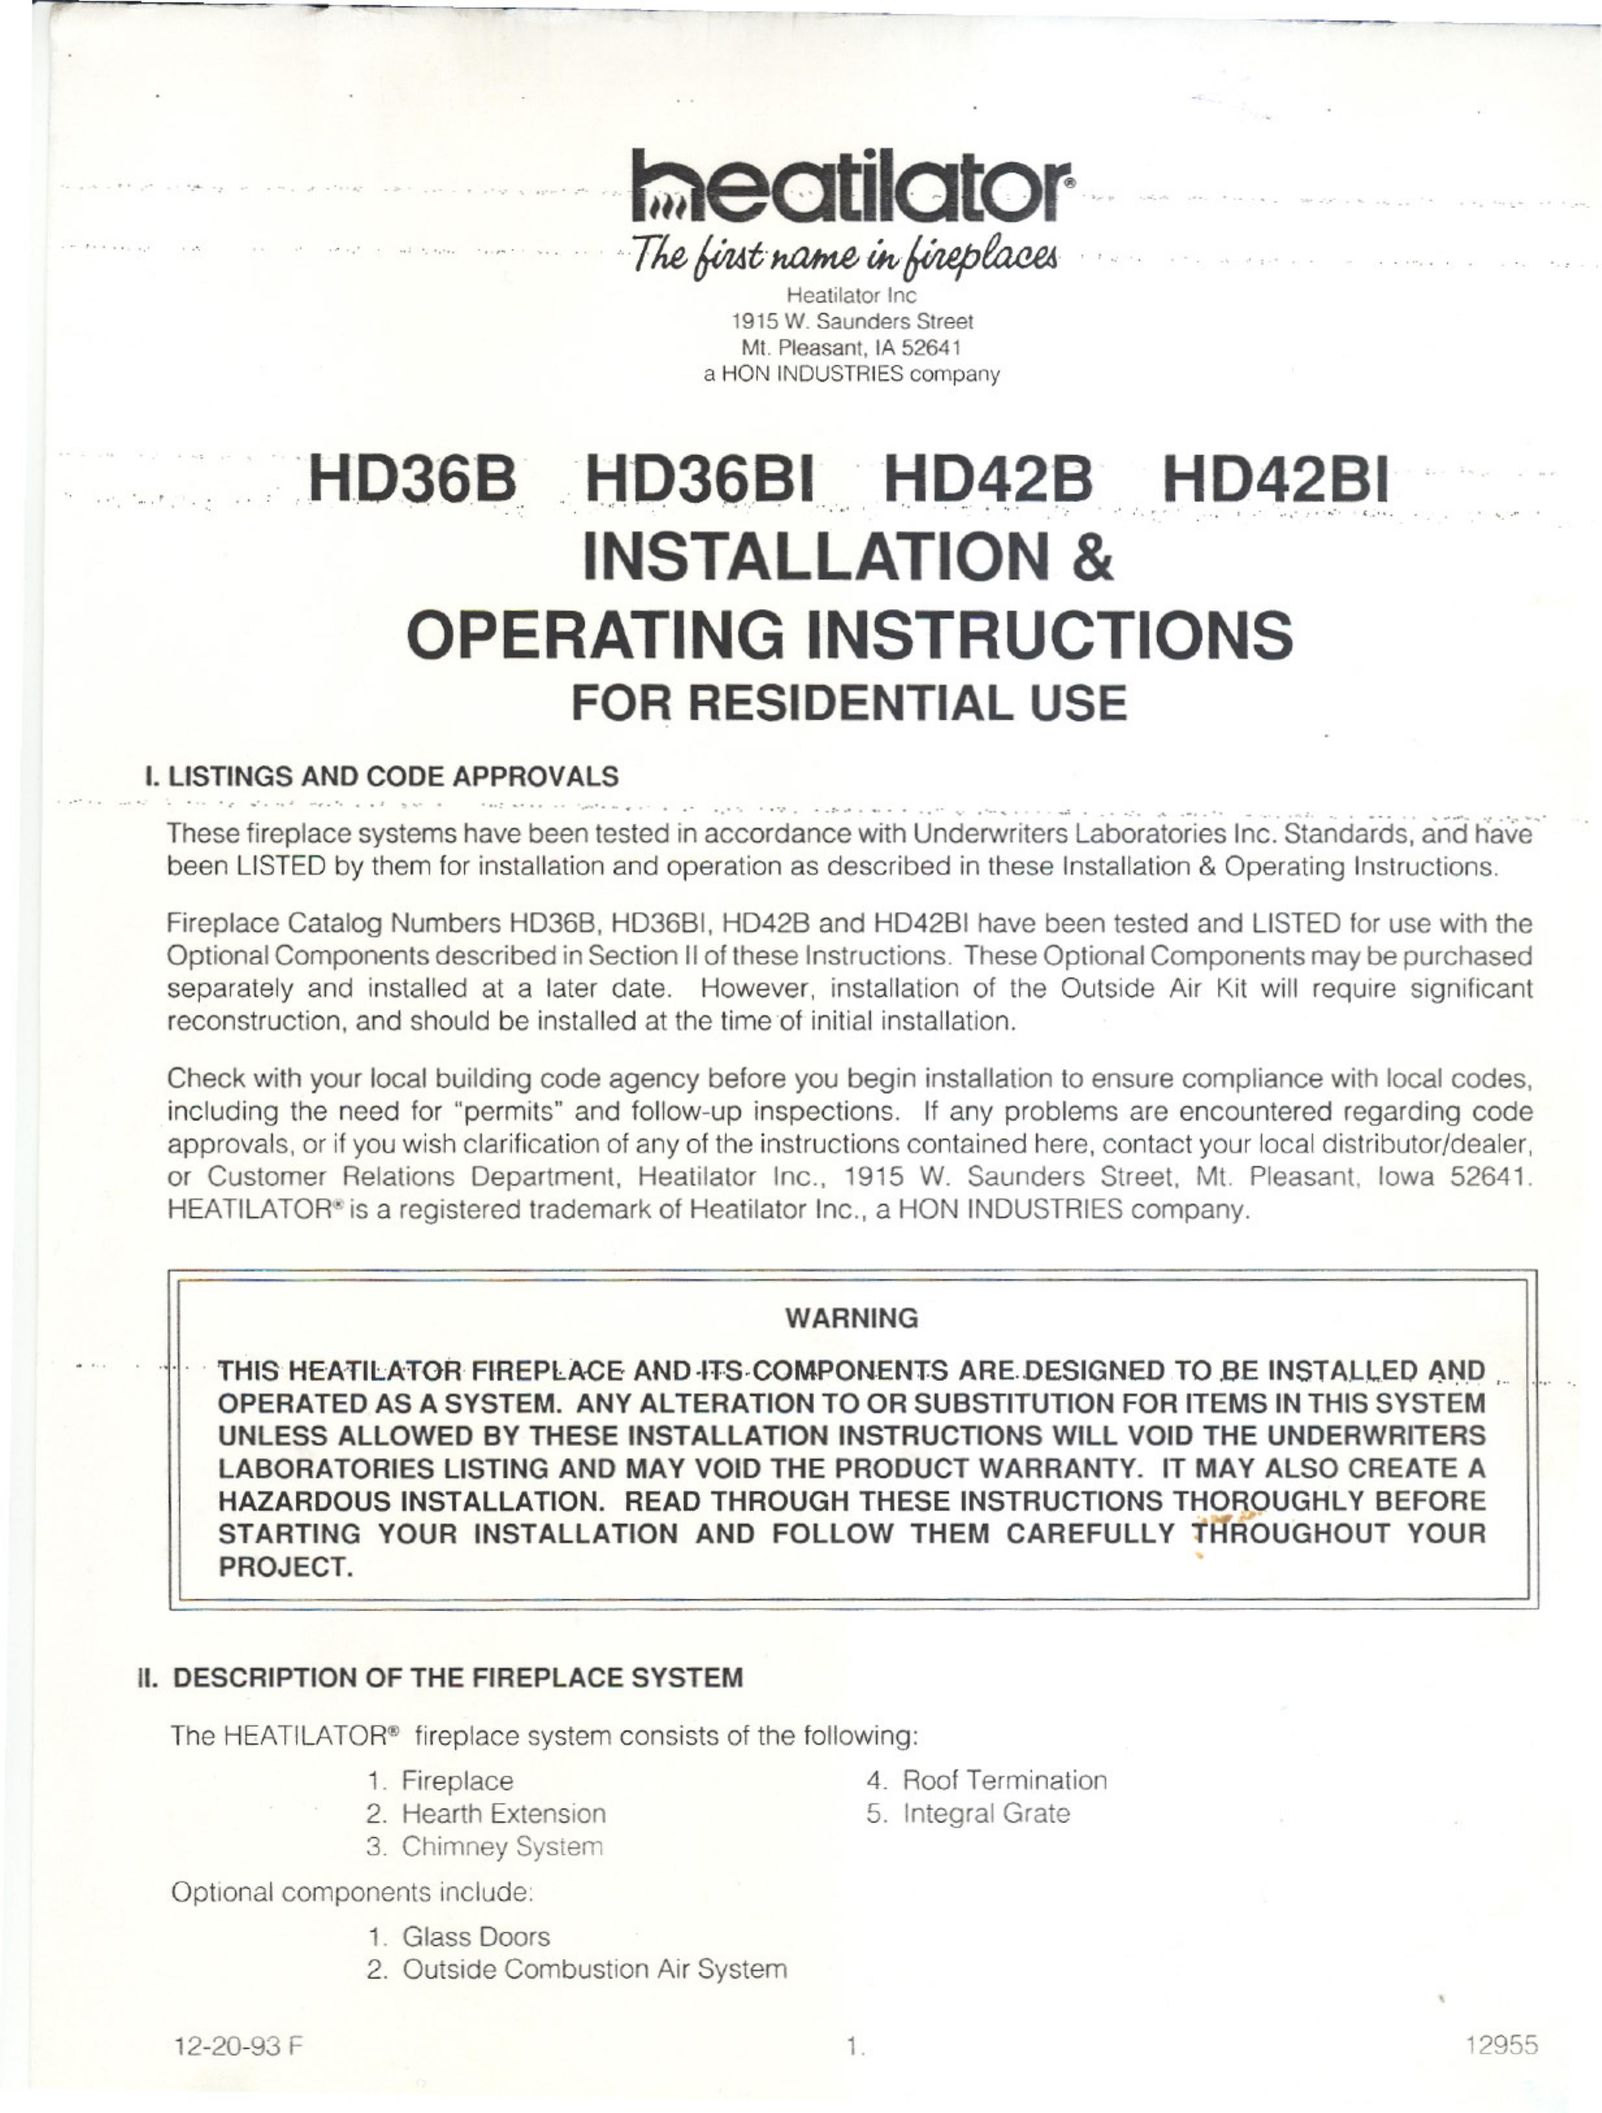 Heatiator HD36B Indoor Fireplace User Manual